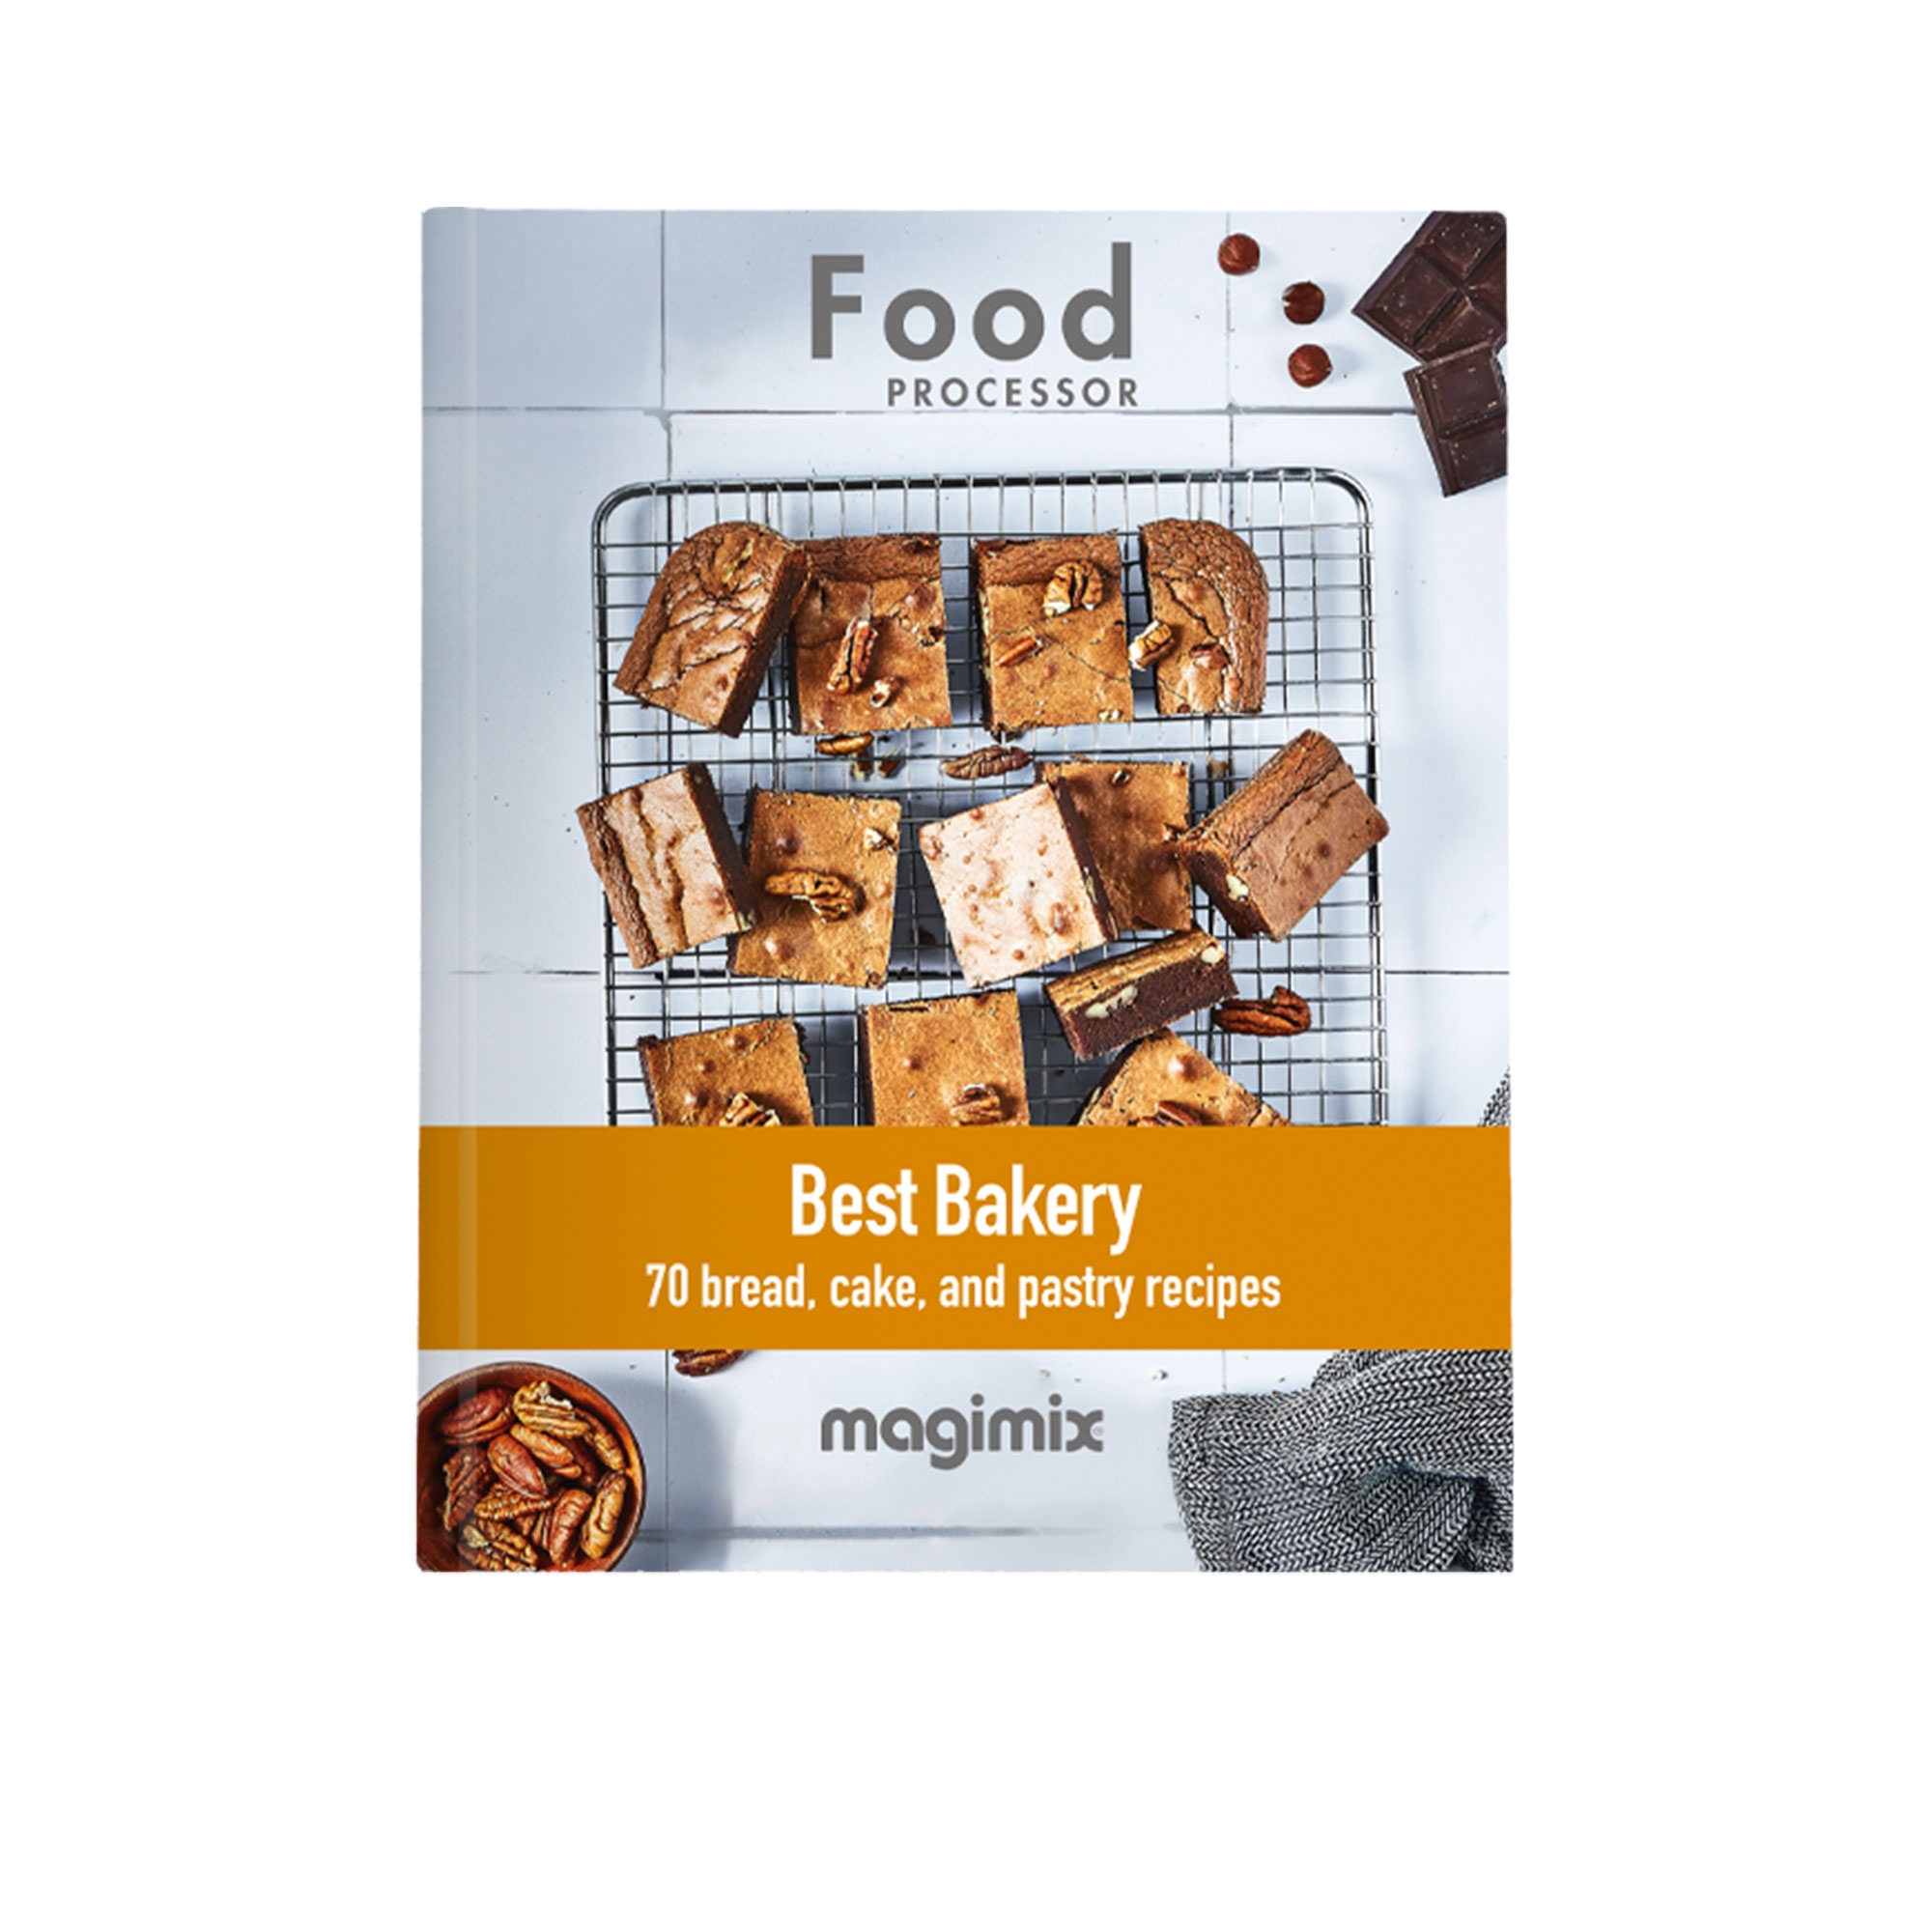 Magimix Best Bakery Recipe Book Image 2